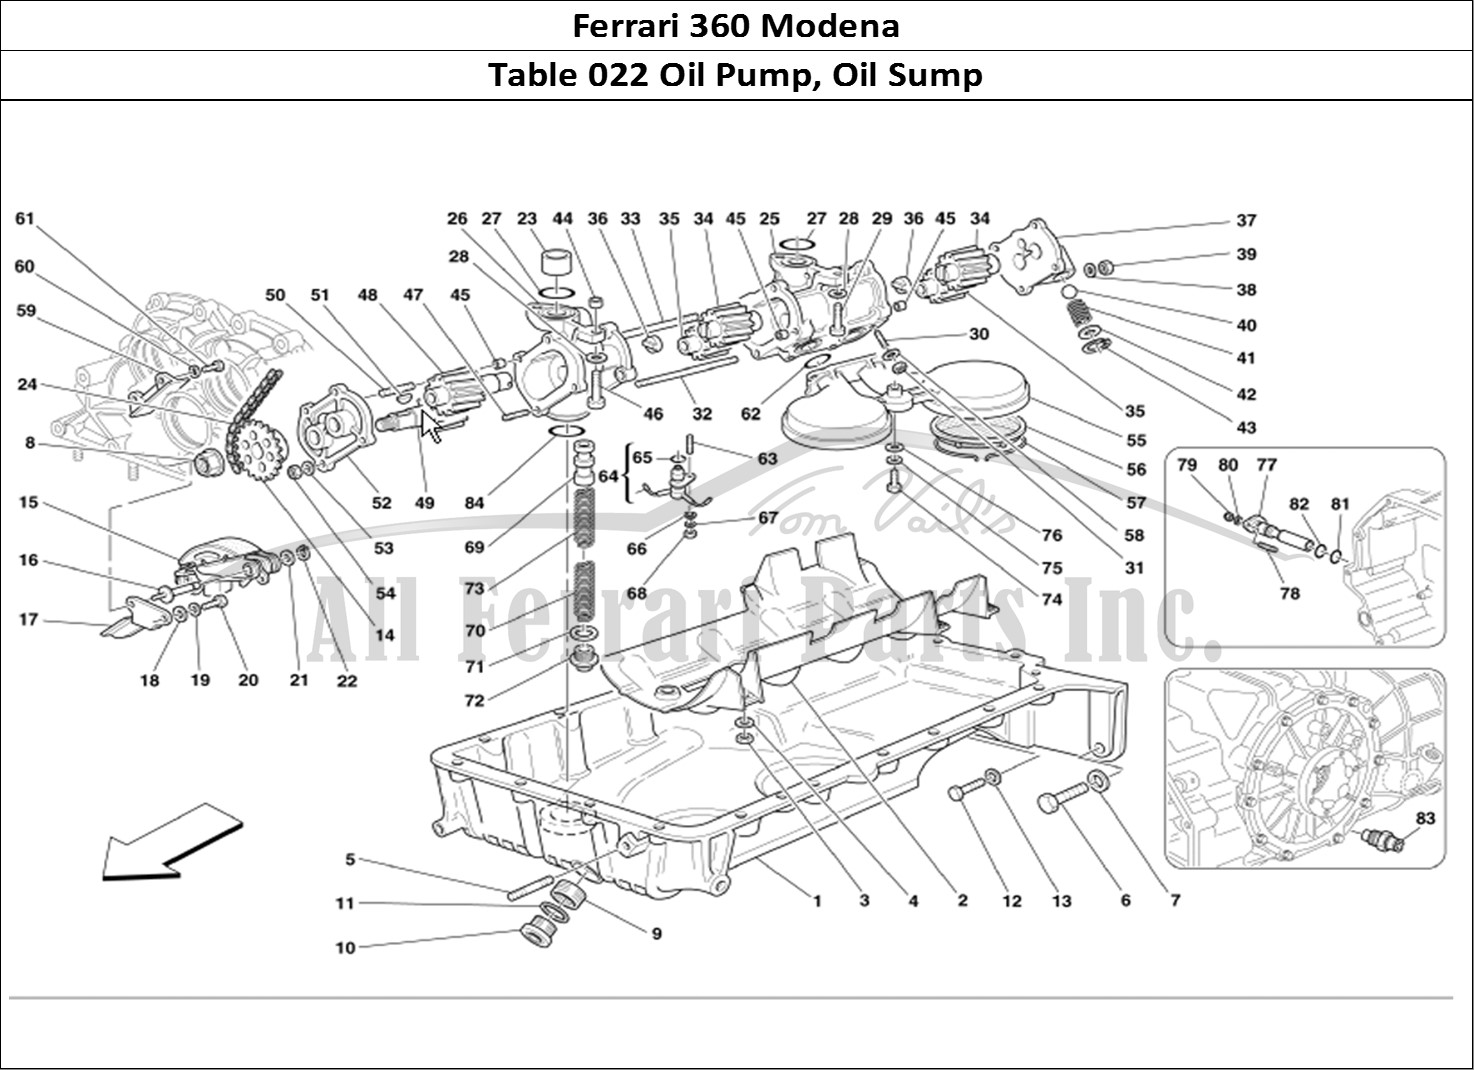 Ferrari Parts Ferrari 360 Modena Page 022 Pumps and Oil Sump